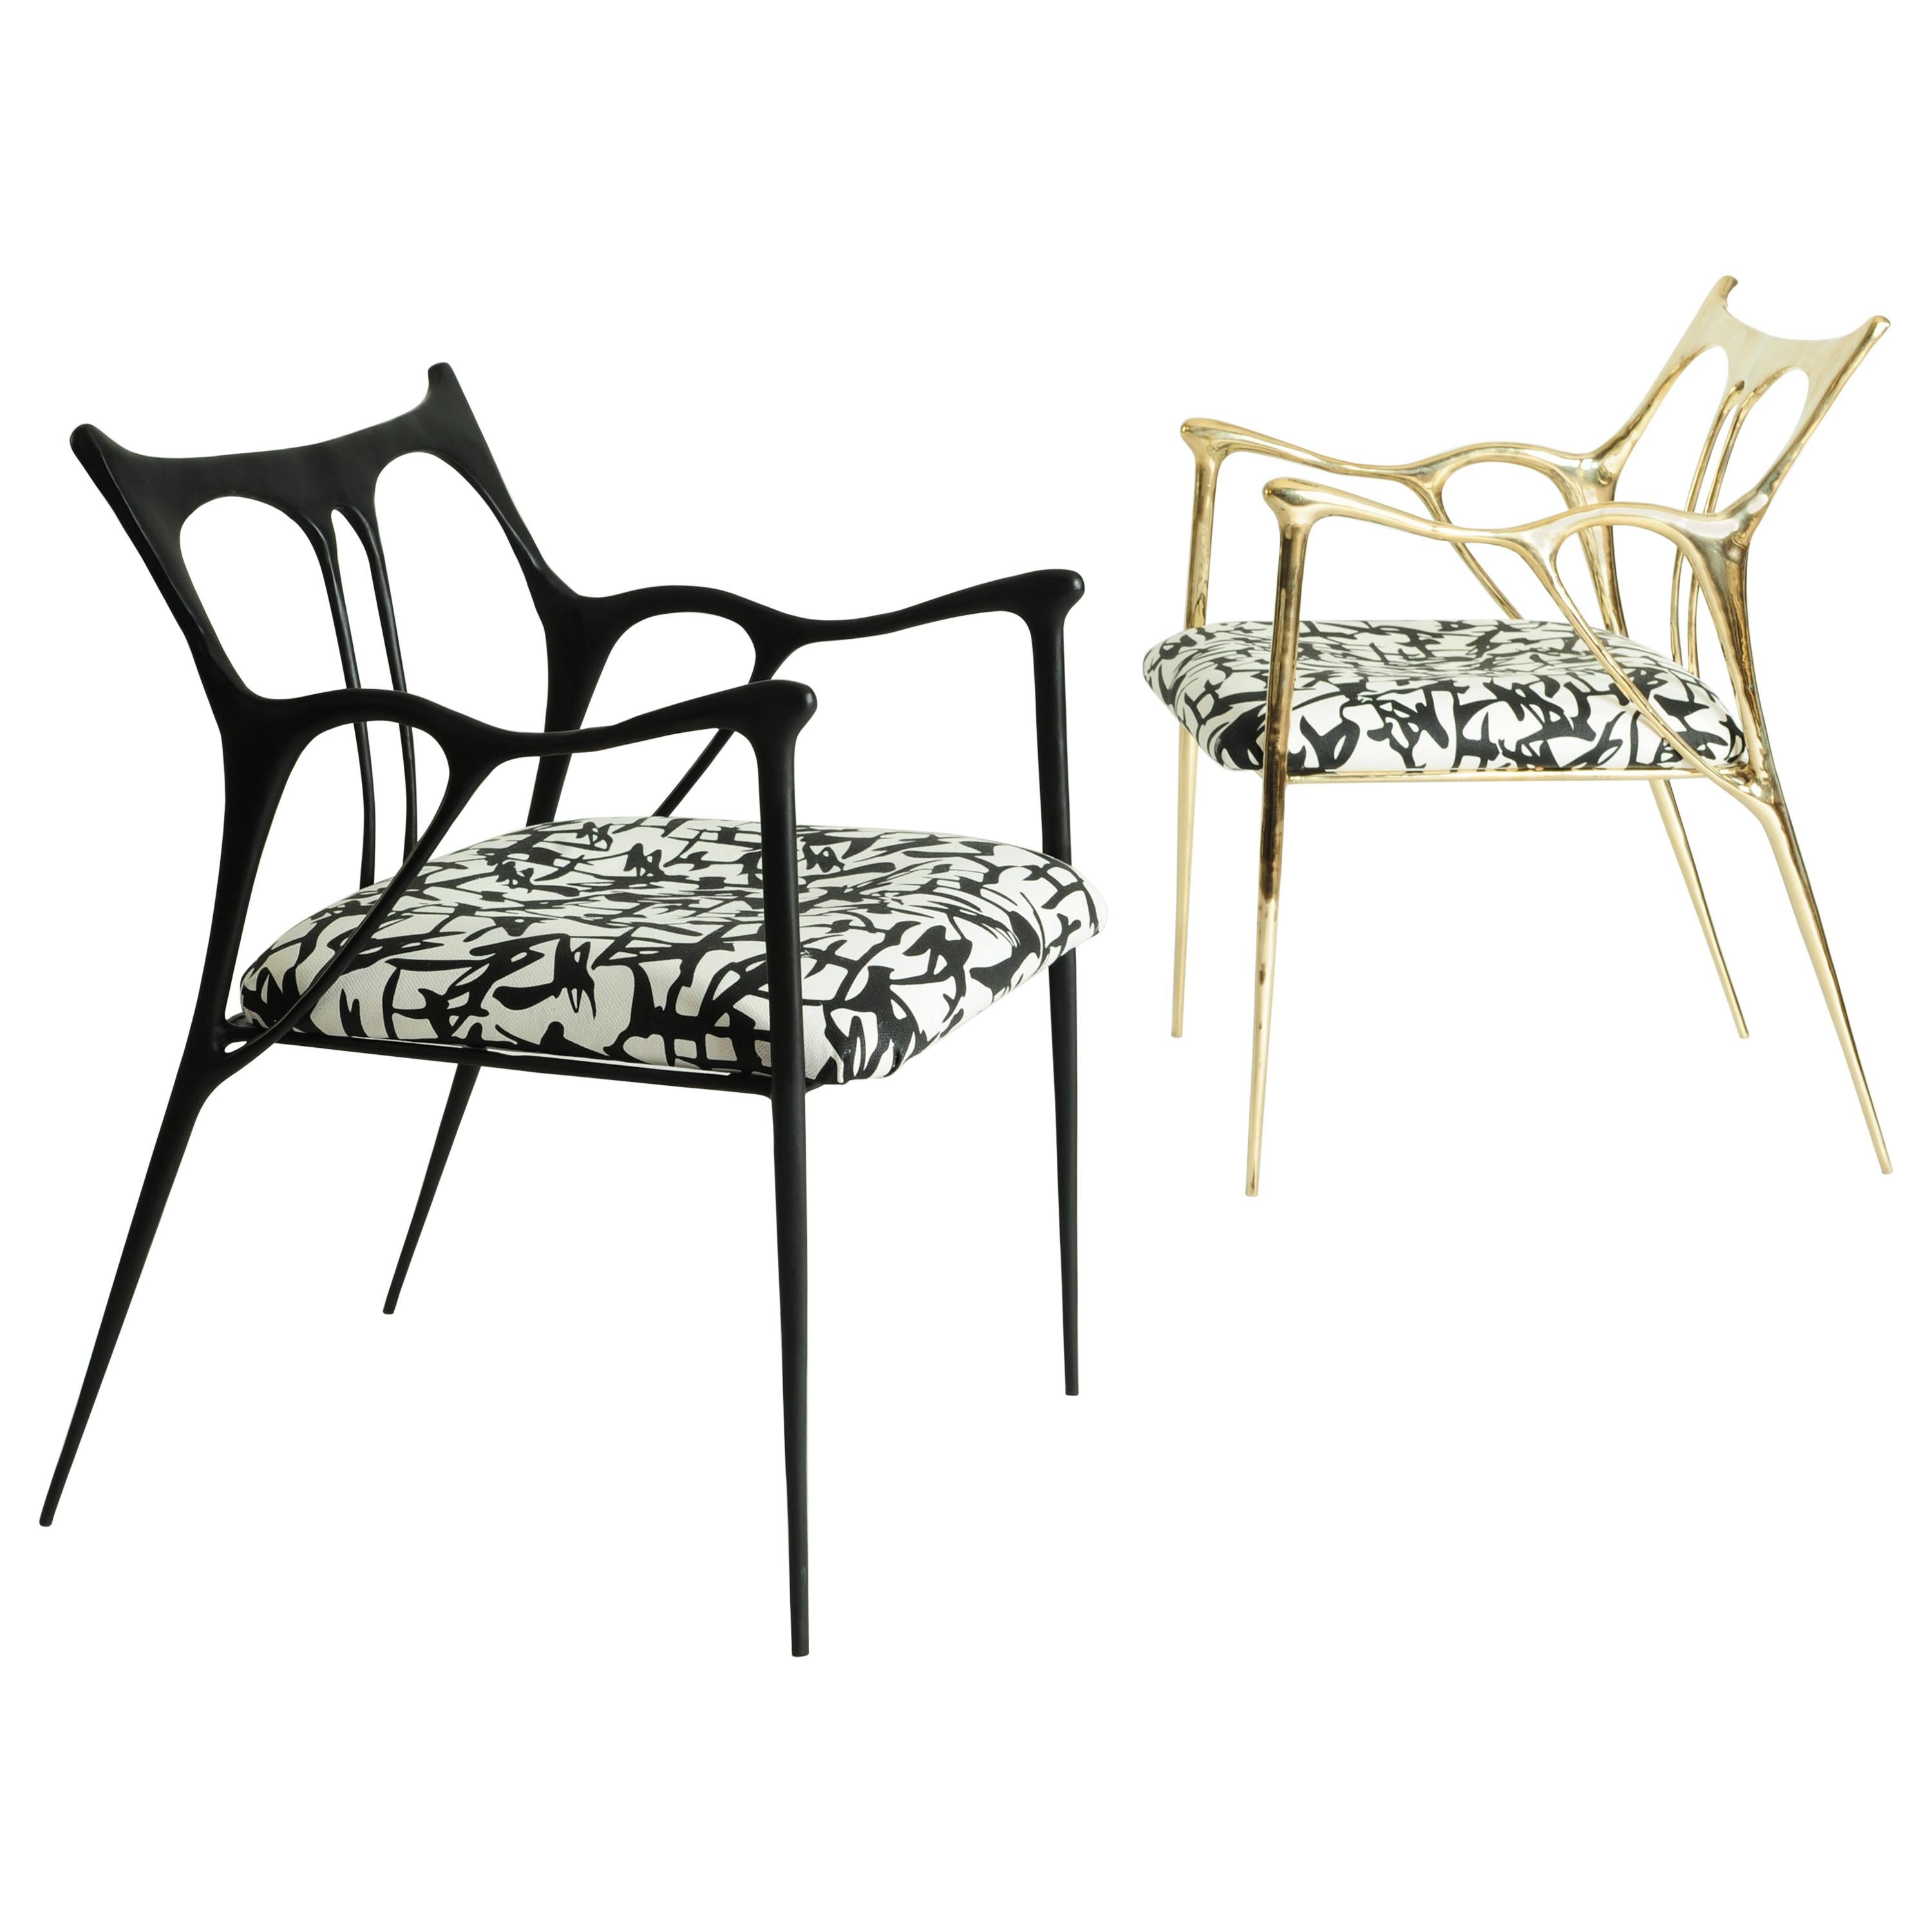 Pair of Sculpted Brass Chairs, Misaya